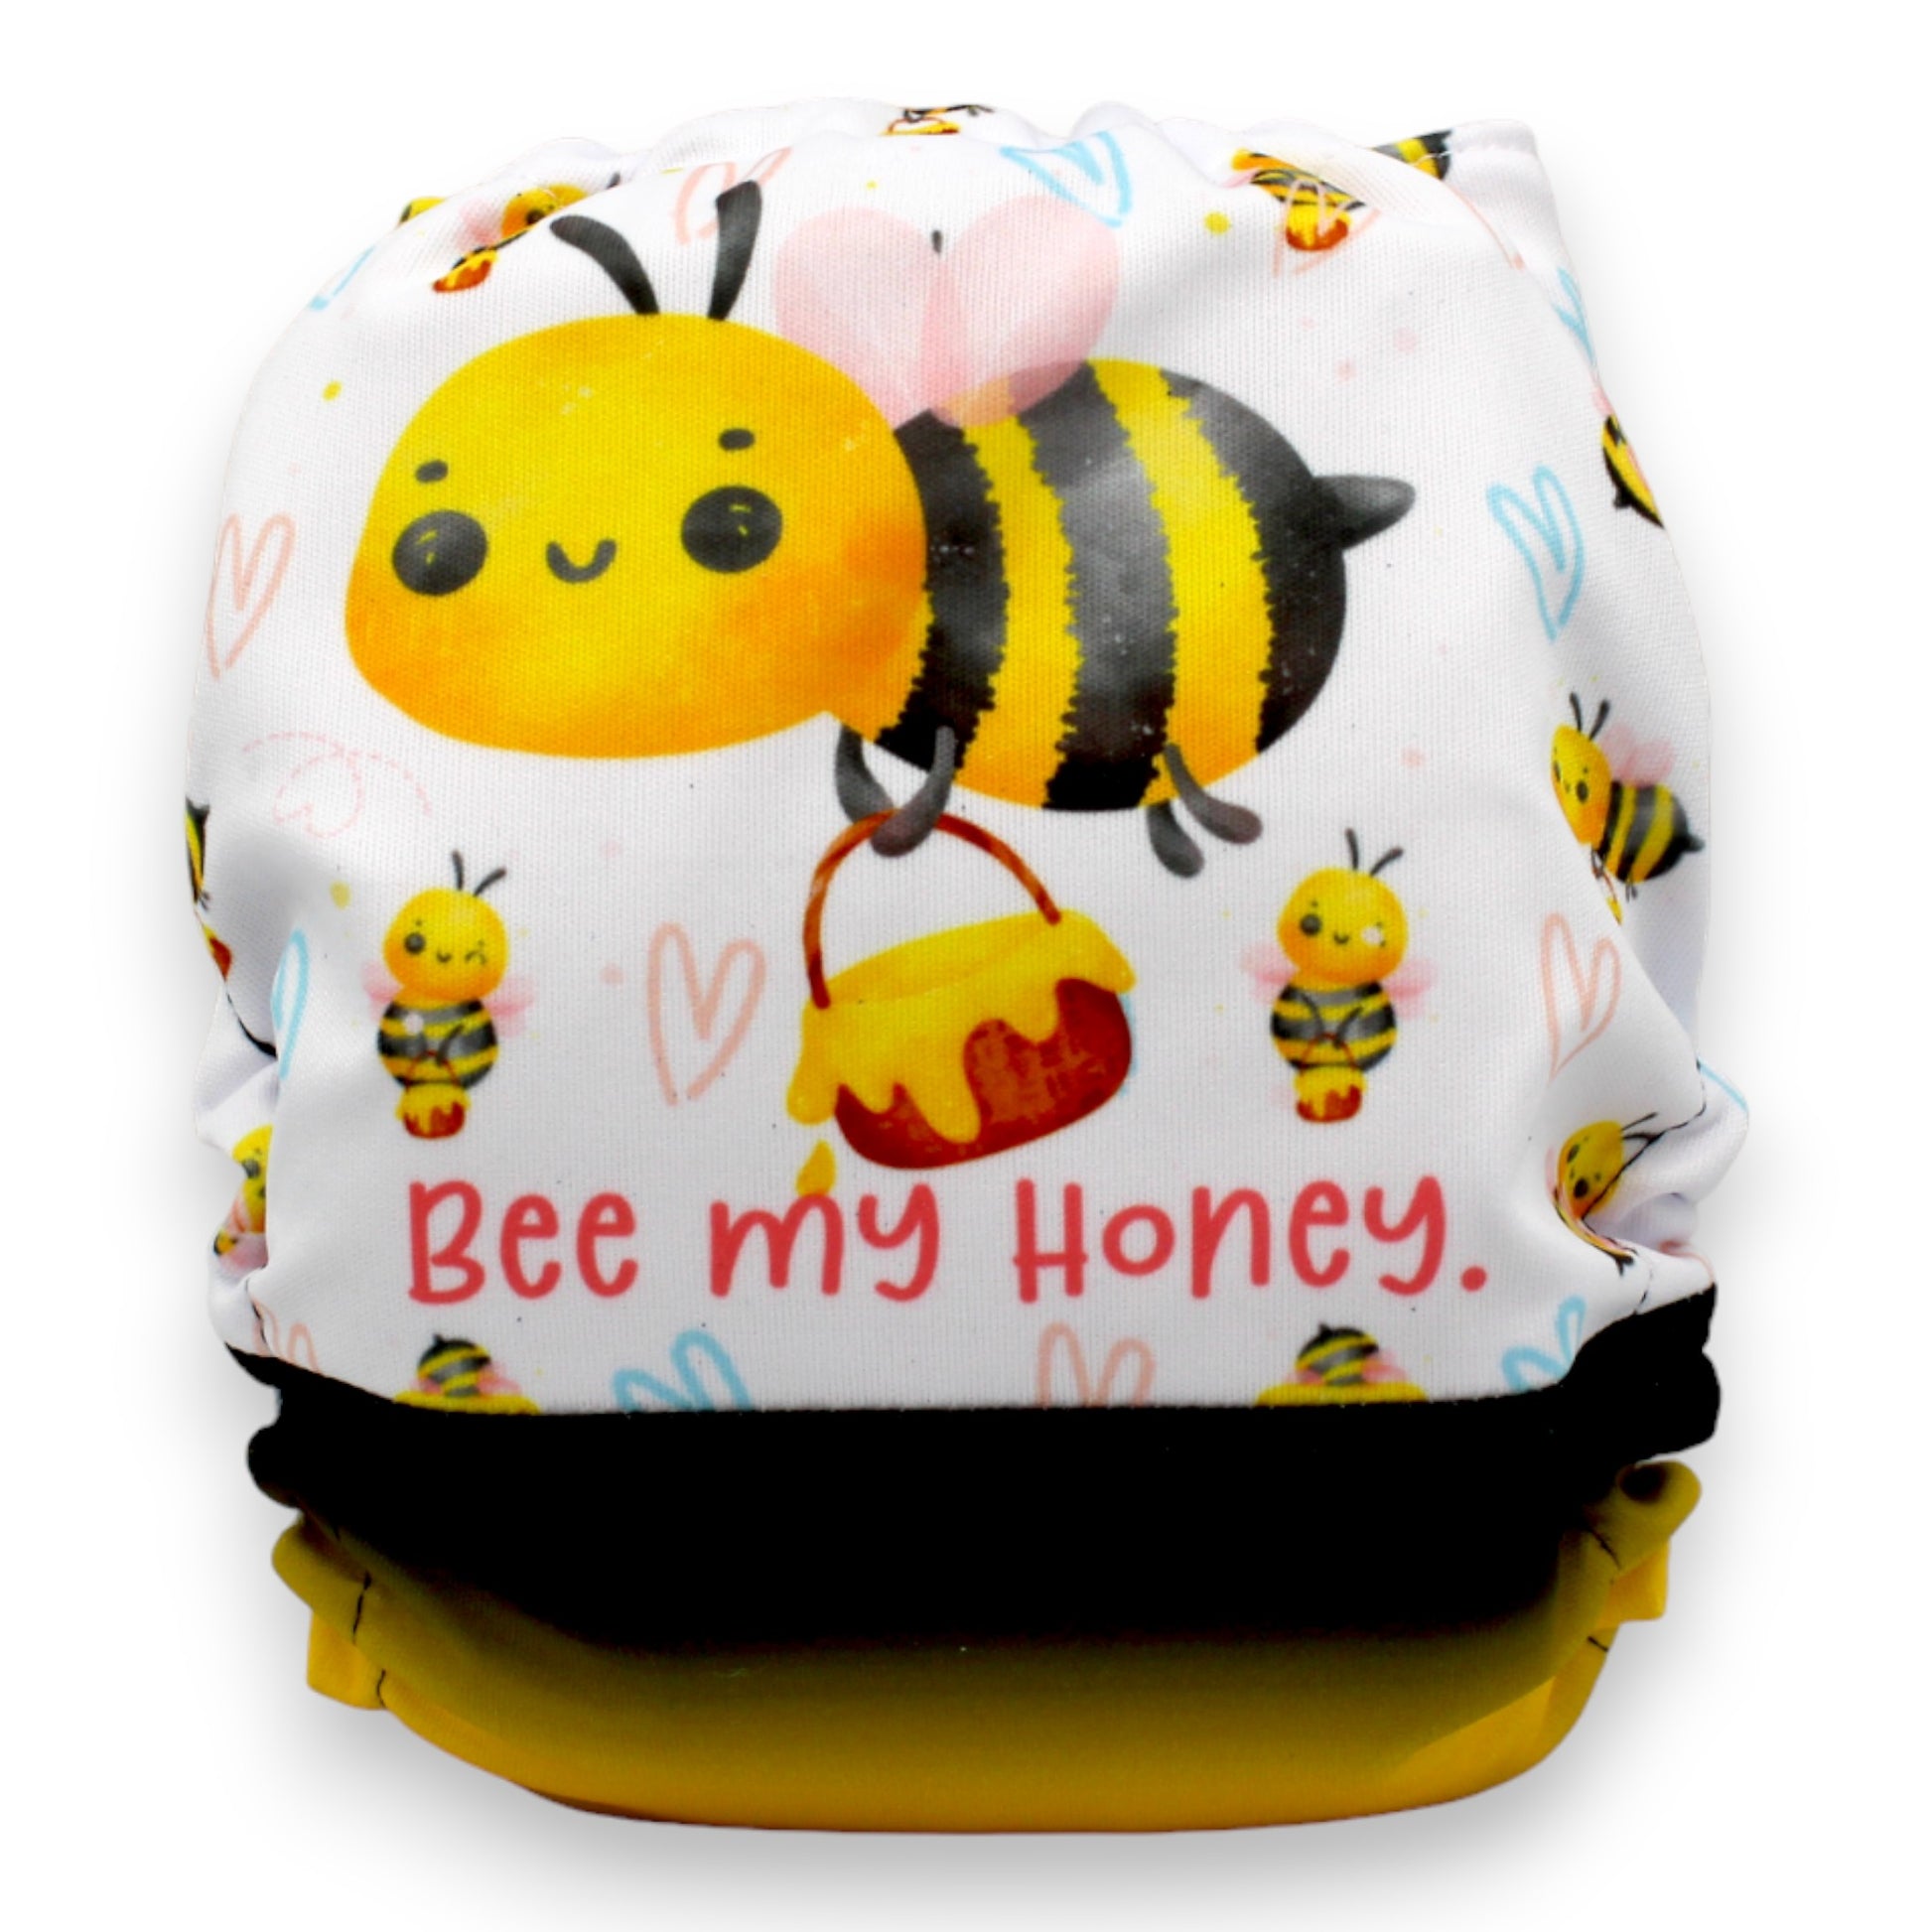 Couches - Bee my honey (7375902670985)